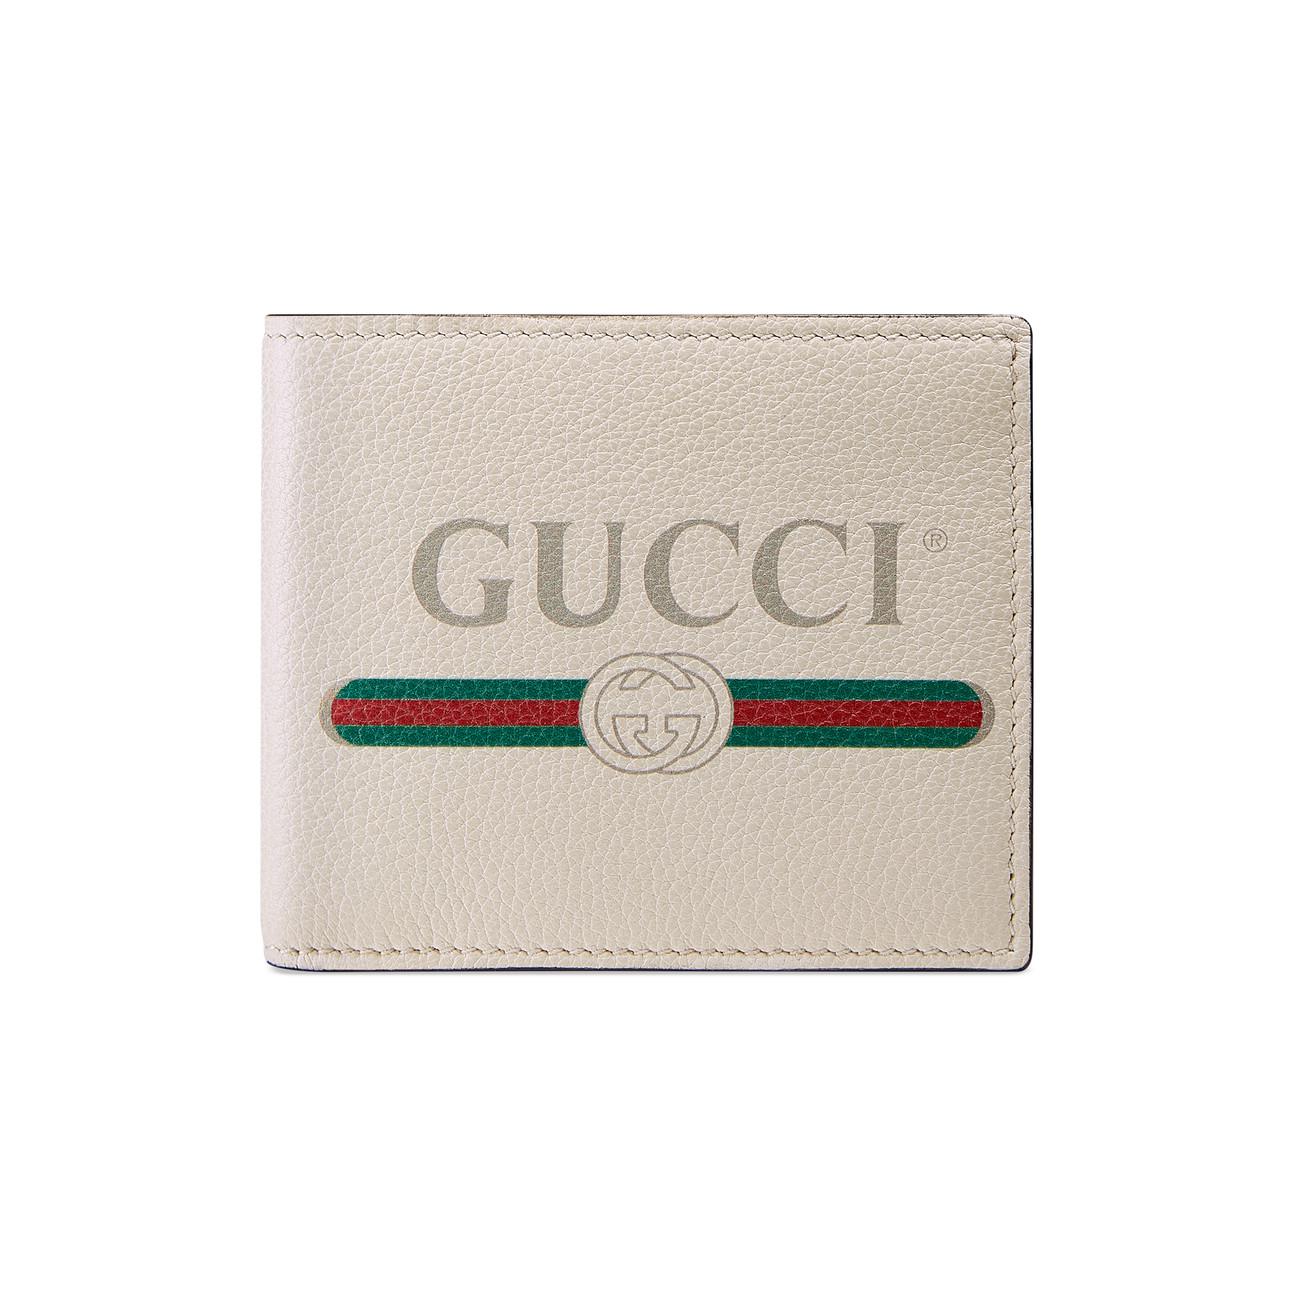 white gucci wallet mens